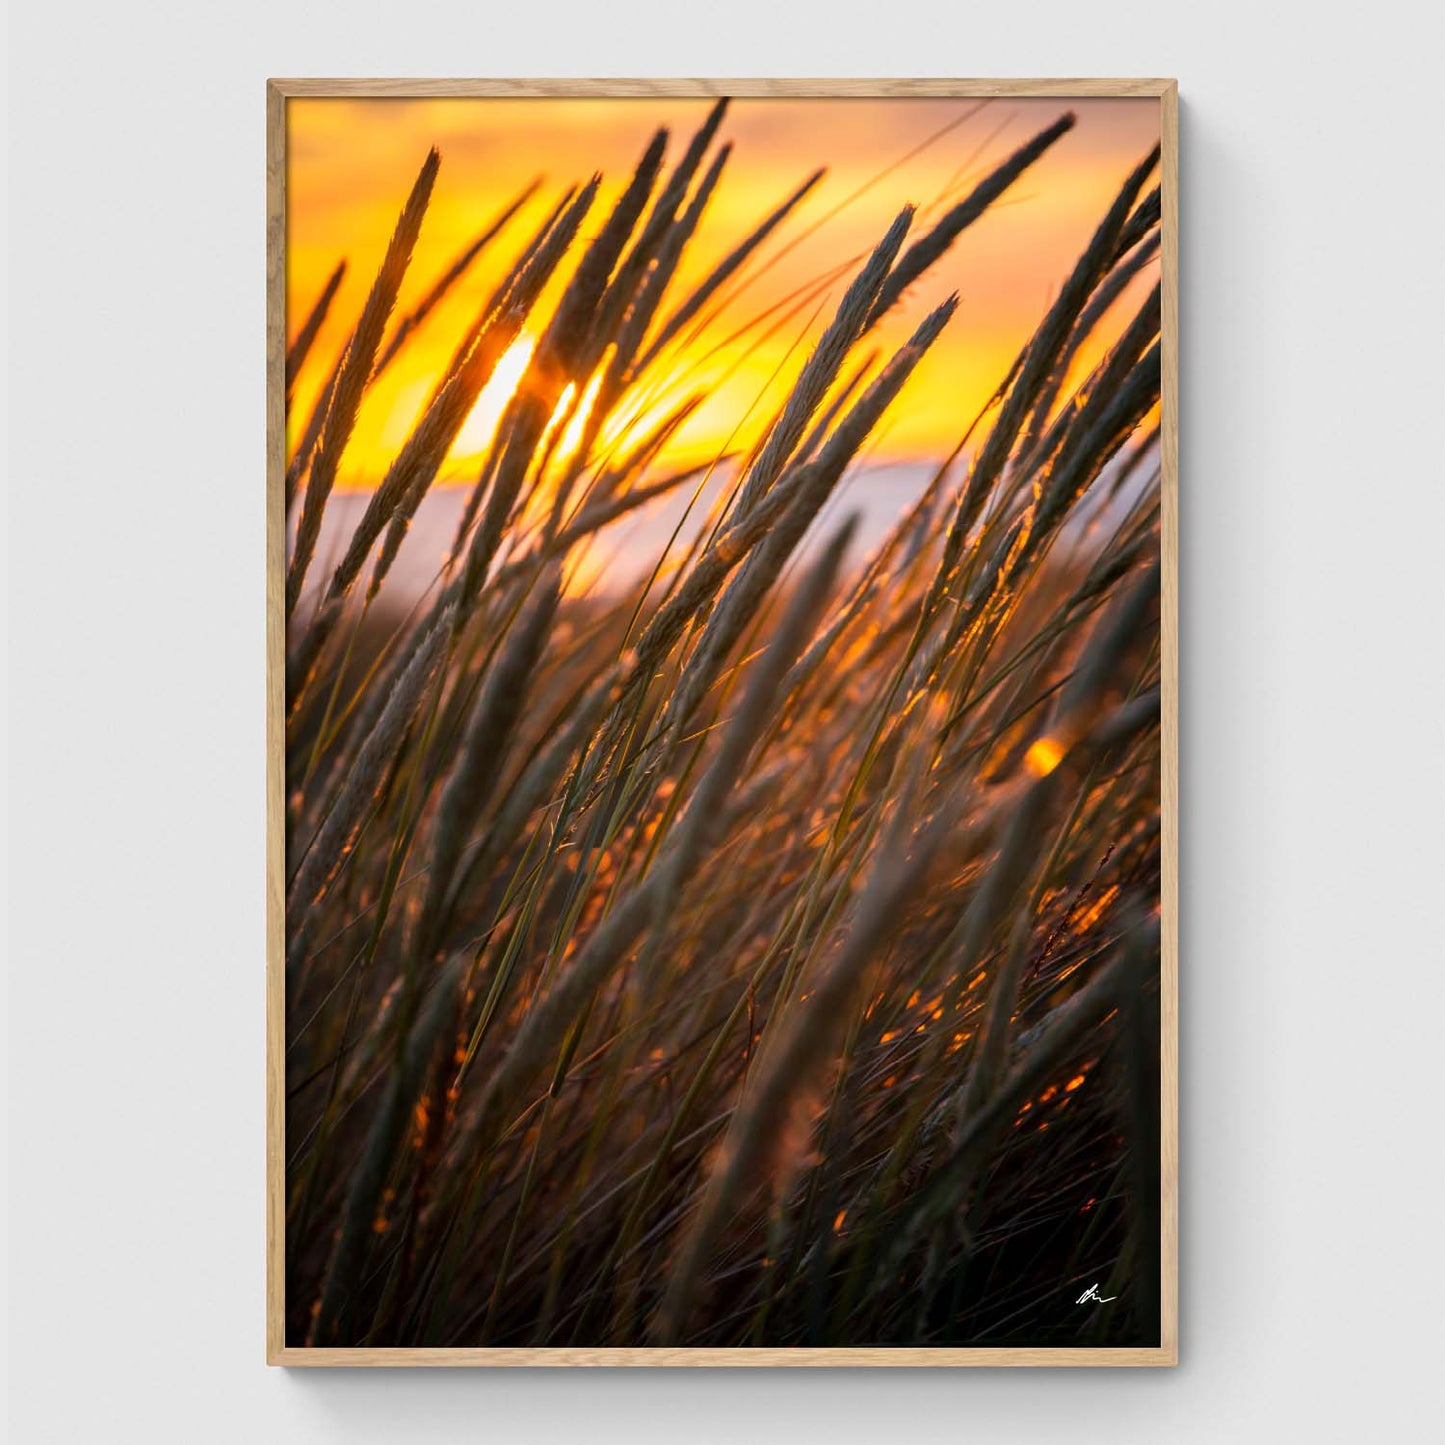 Reeds at sunset I